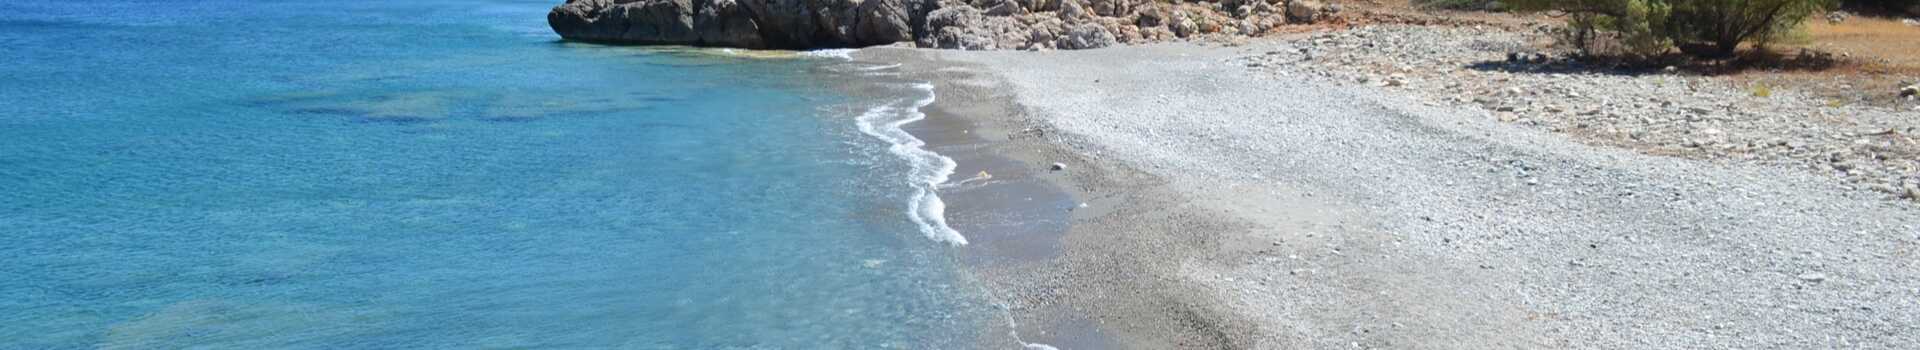 Kythira, pláž Agios Georgio4